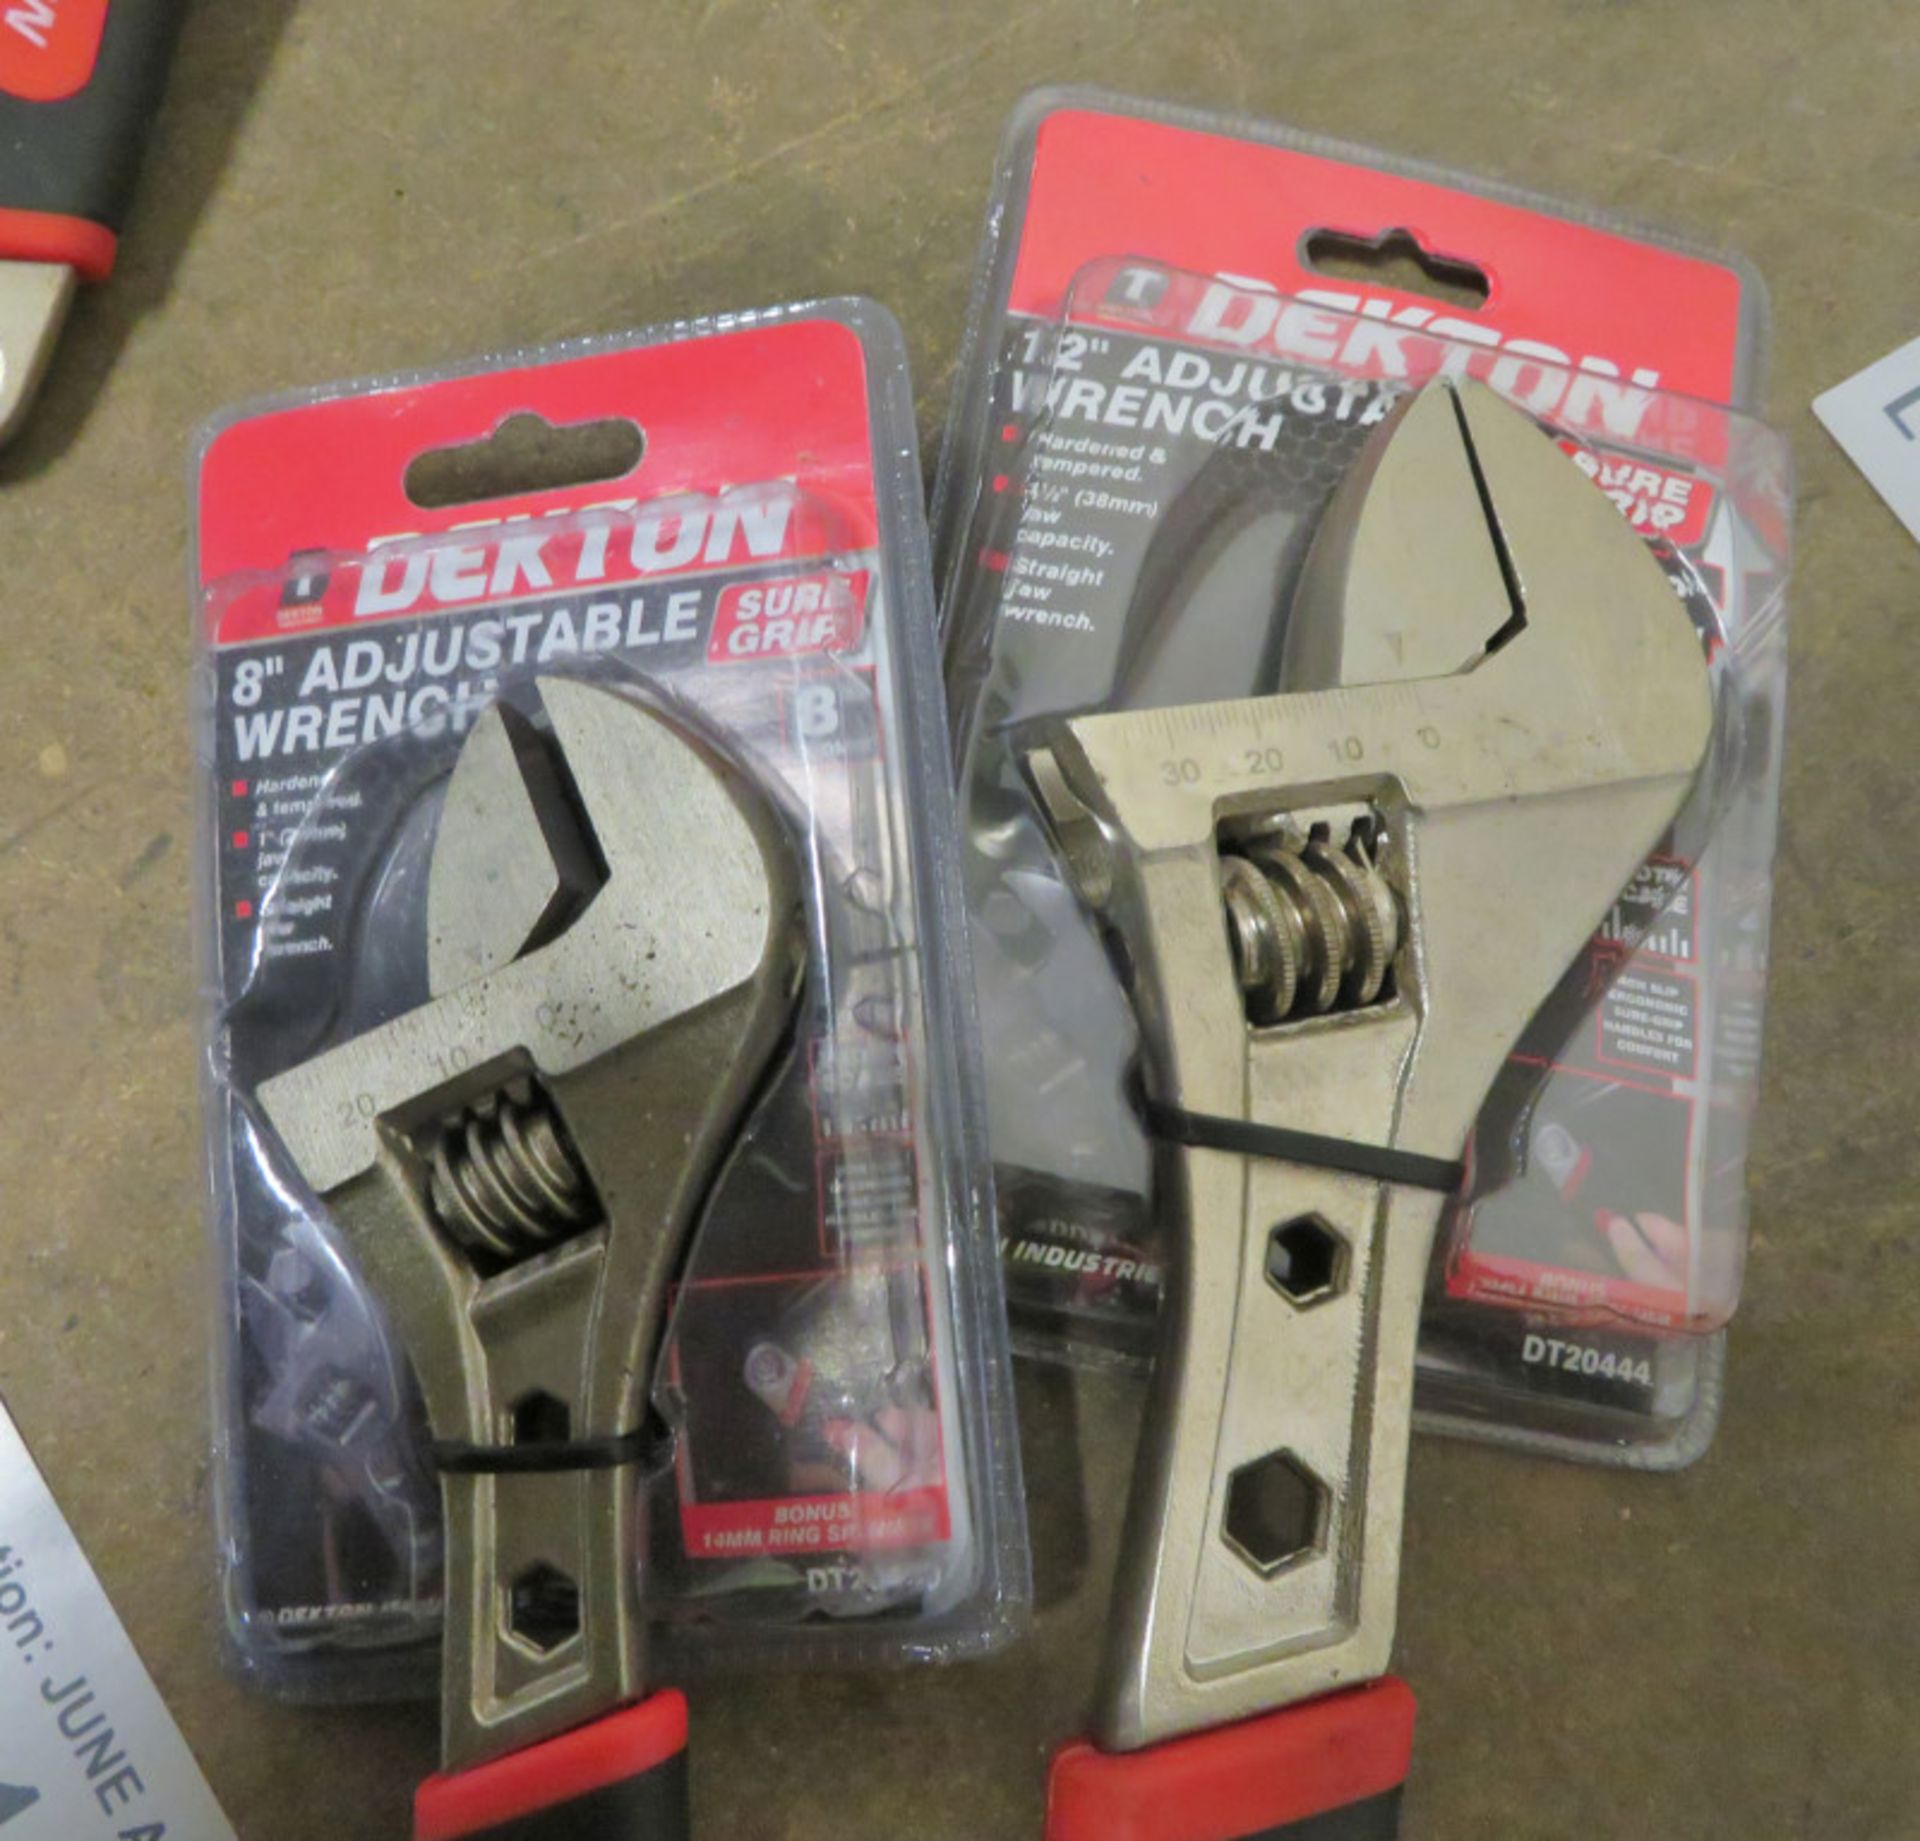 Dekton 8inch adjustable wrench, Dekton 12inch adjustable wrench - Image 2 of 2